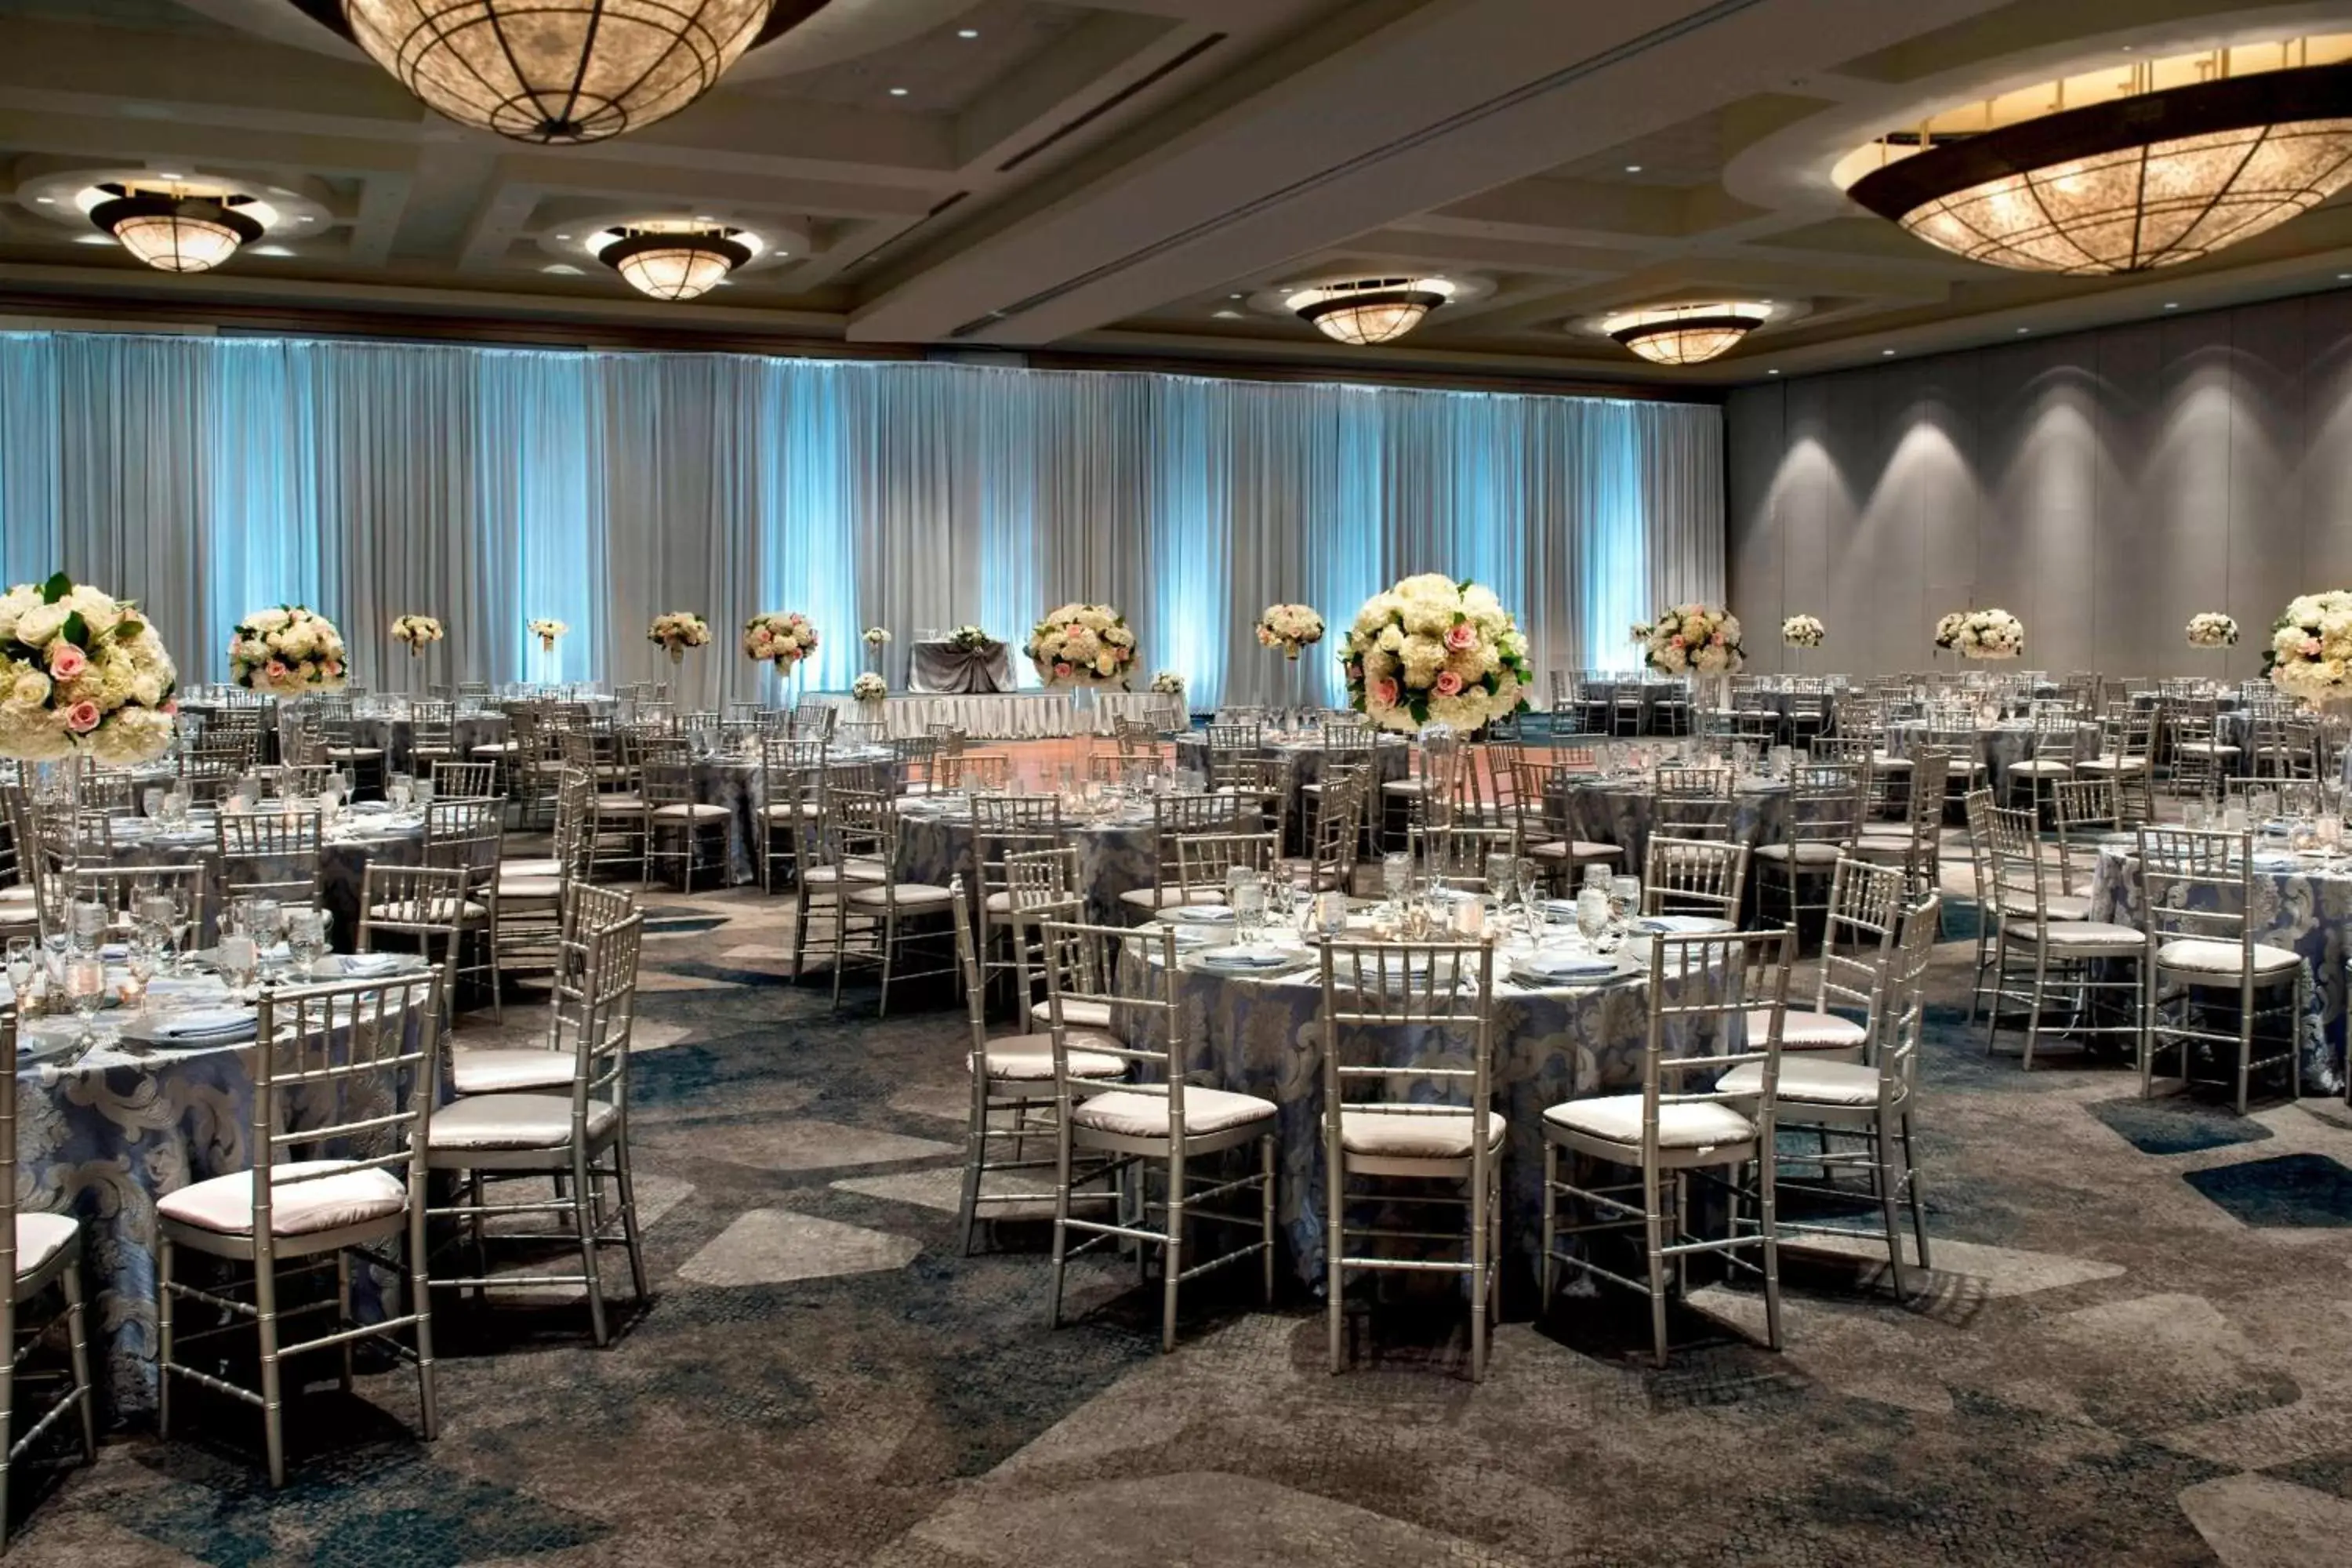 Banquet/Function facilities, Banquet Facilities in Bethesda North Marriott Hotel & Conference Center